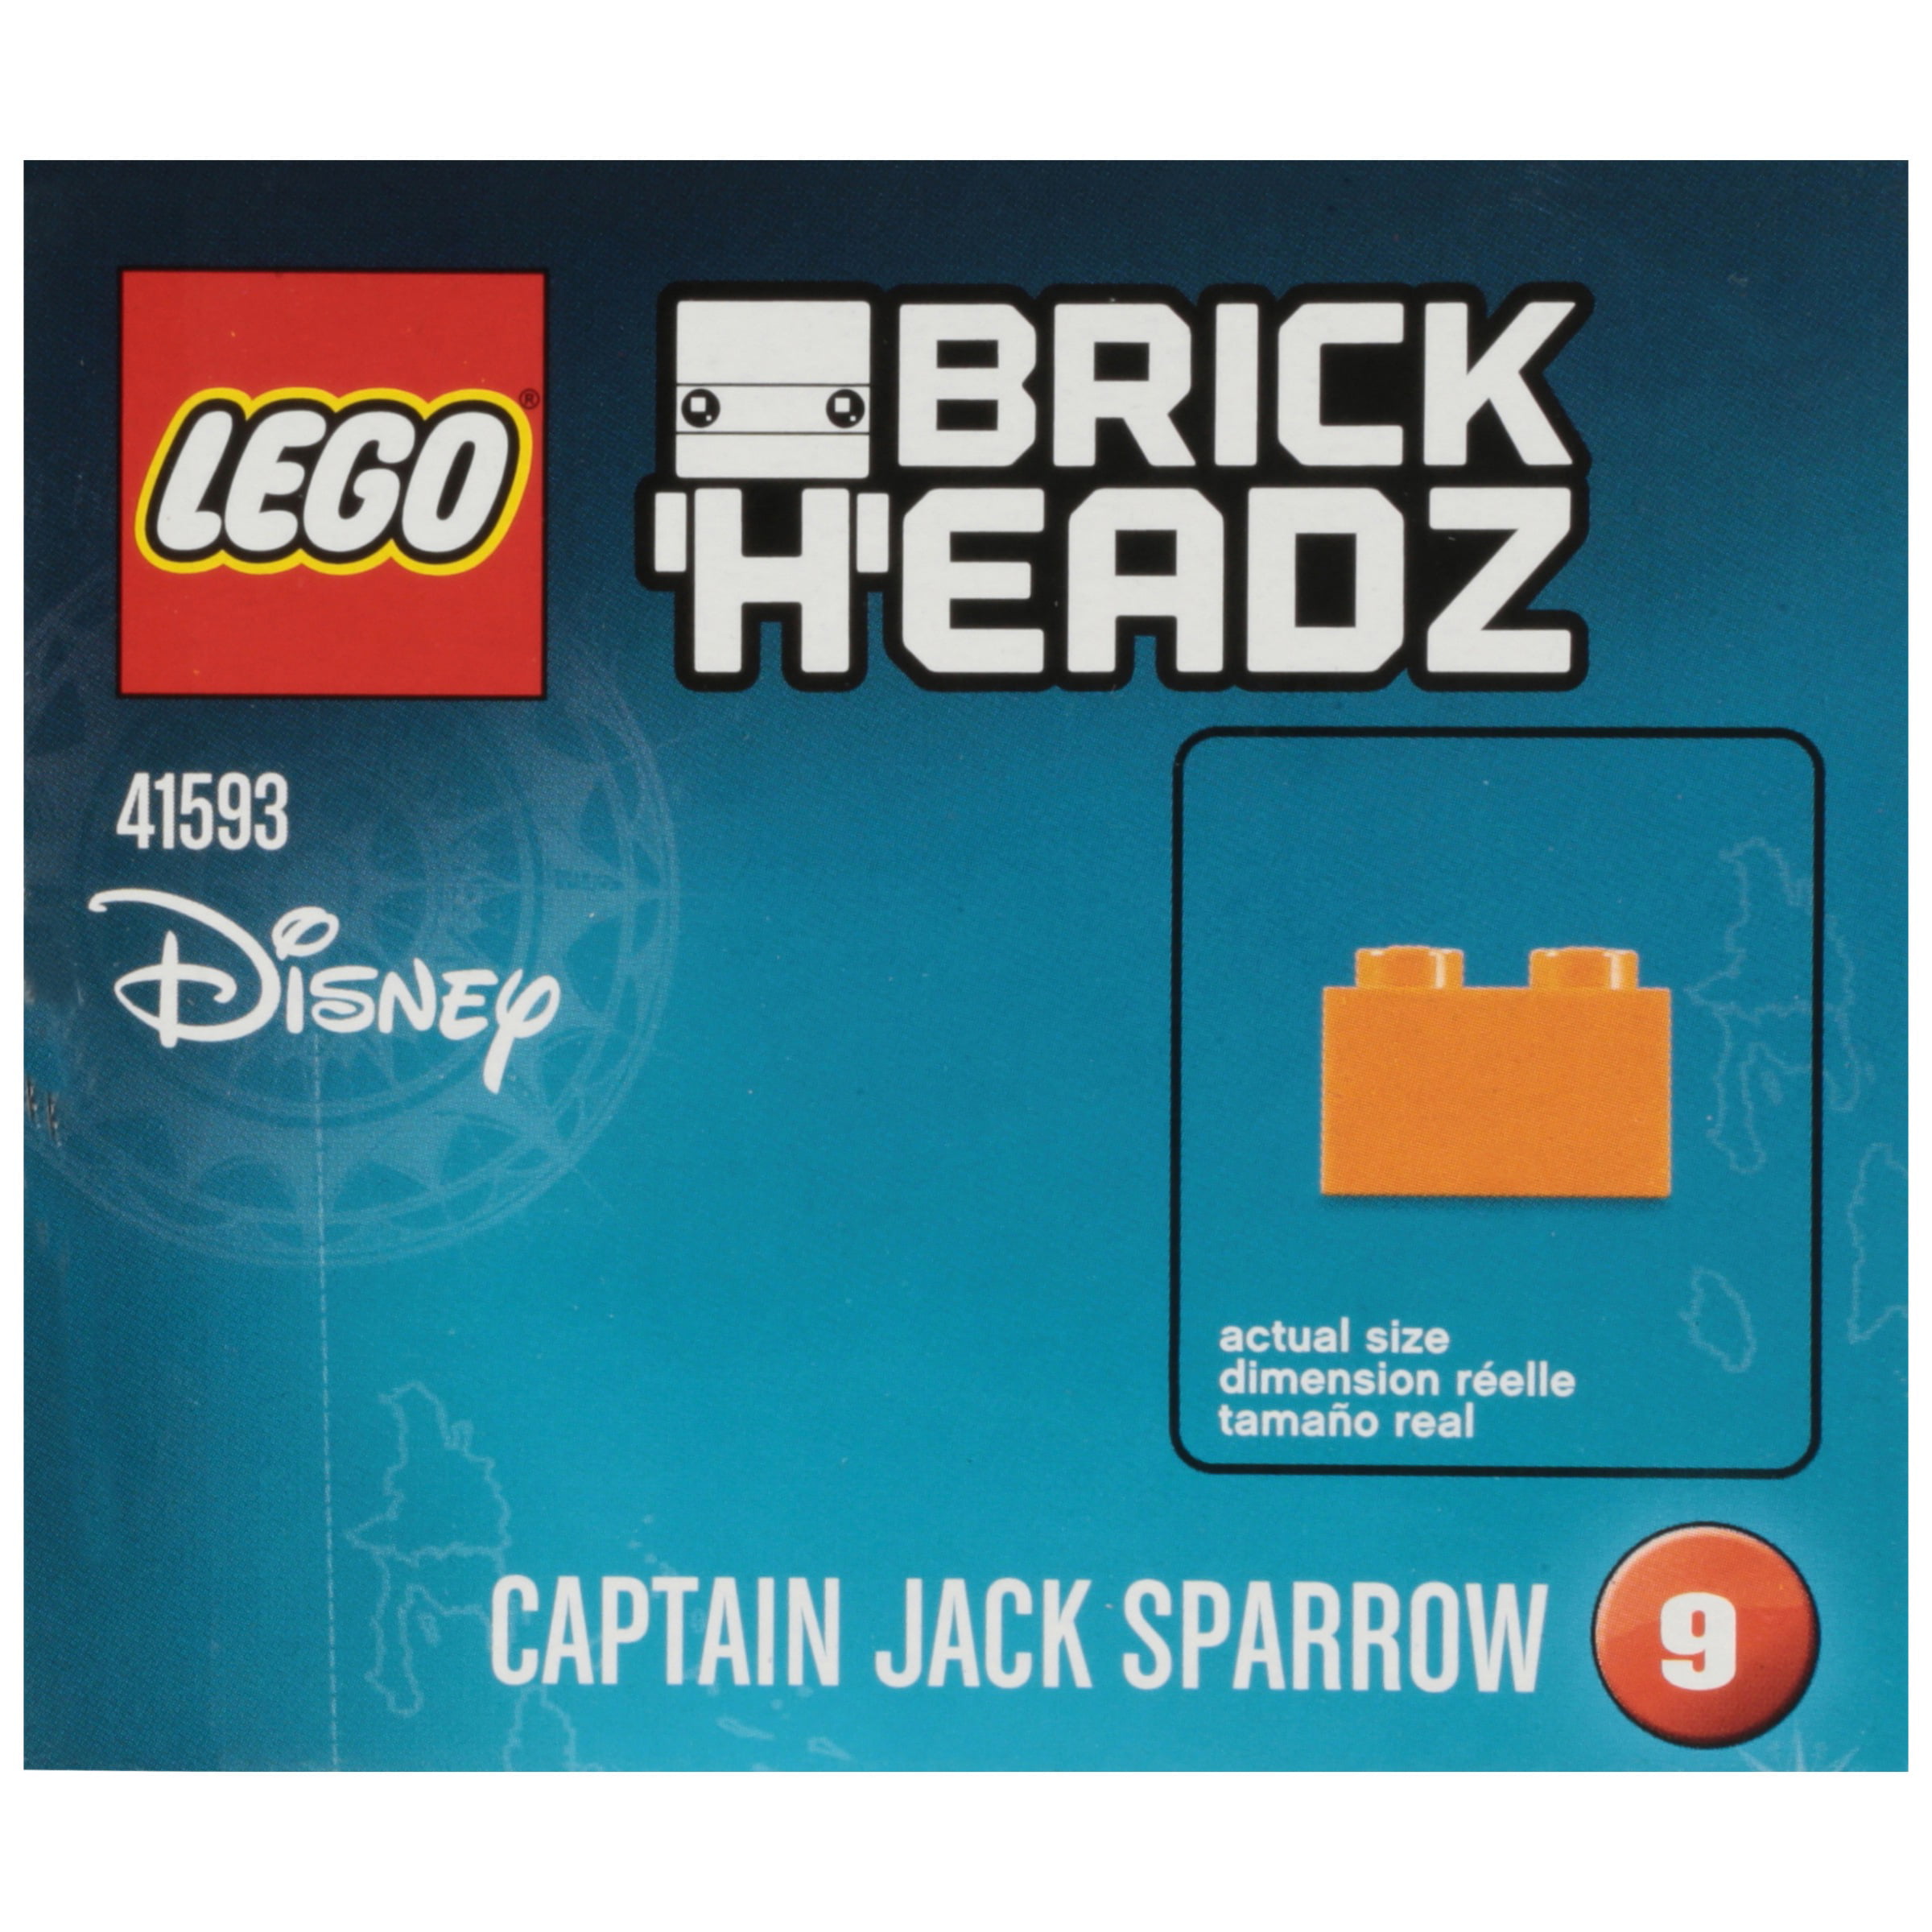 LEGO Brickheadz Captain Jack Sparrow 41593 -